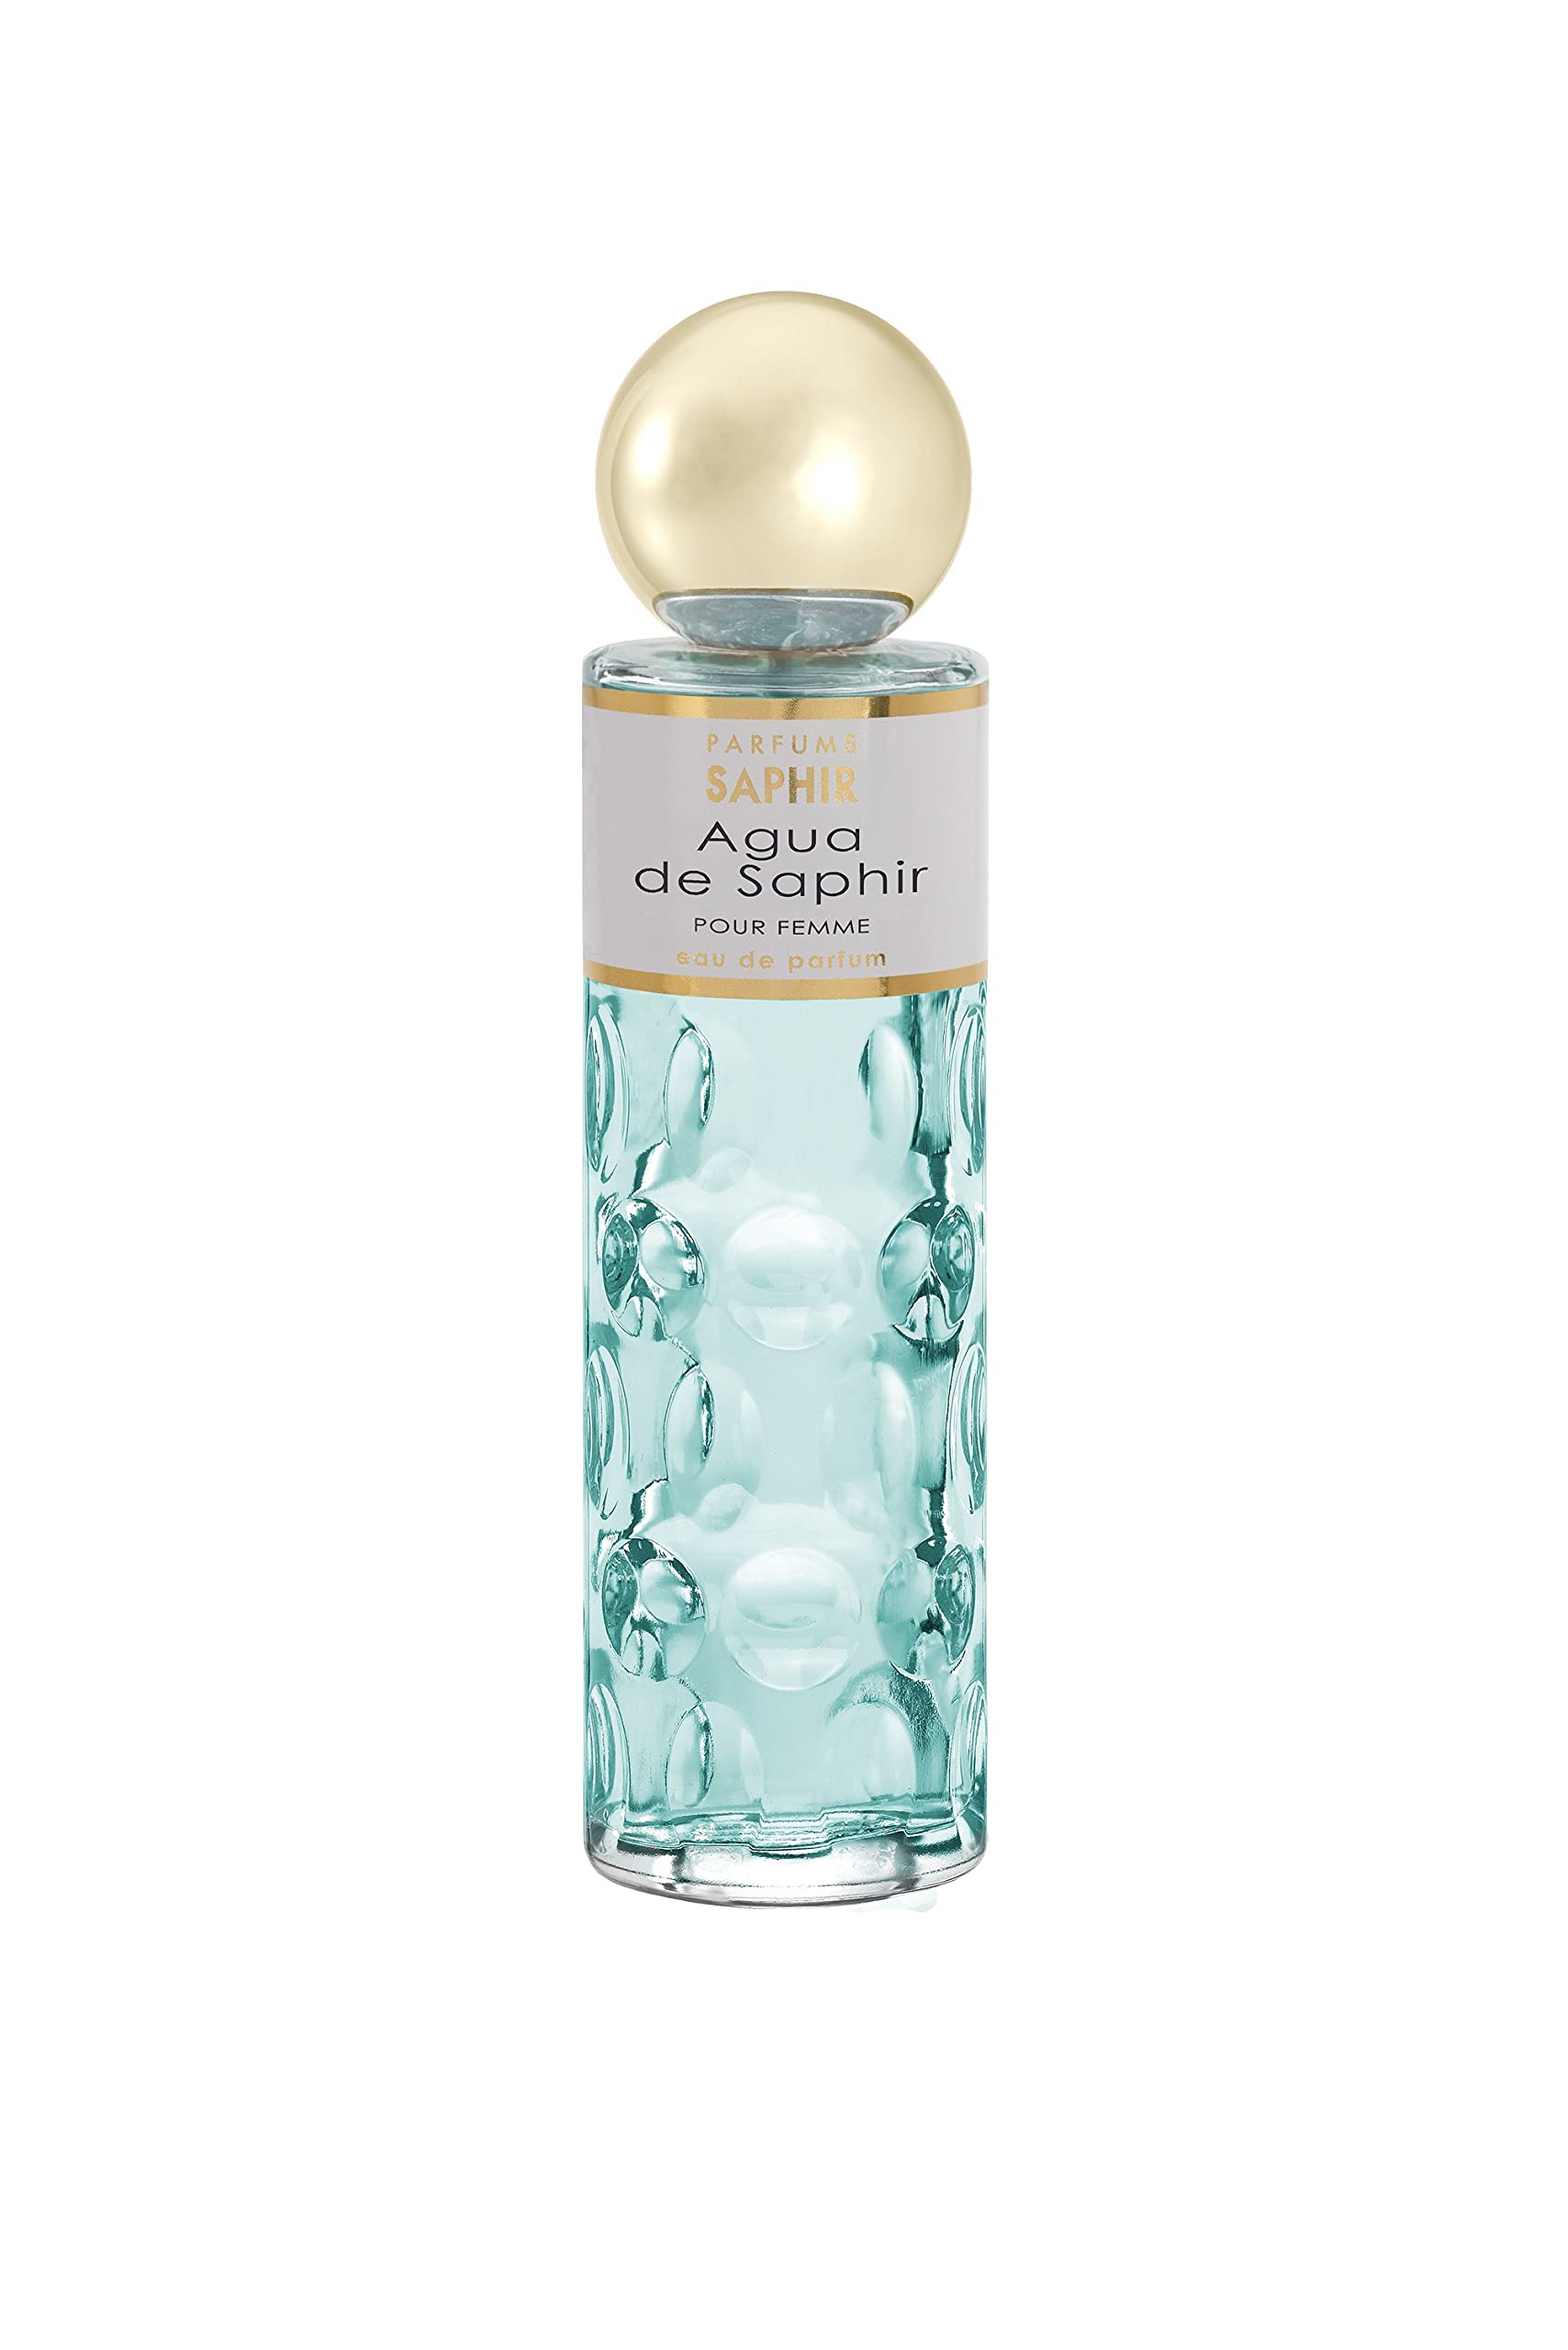 Image of Parfums Saphir - Eau de Parfum 200 ml - agua de saphir